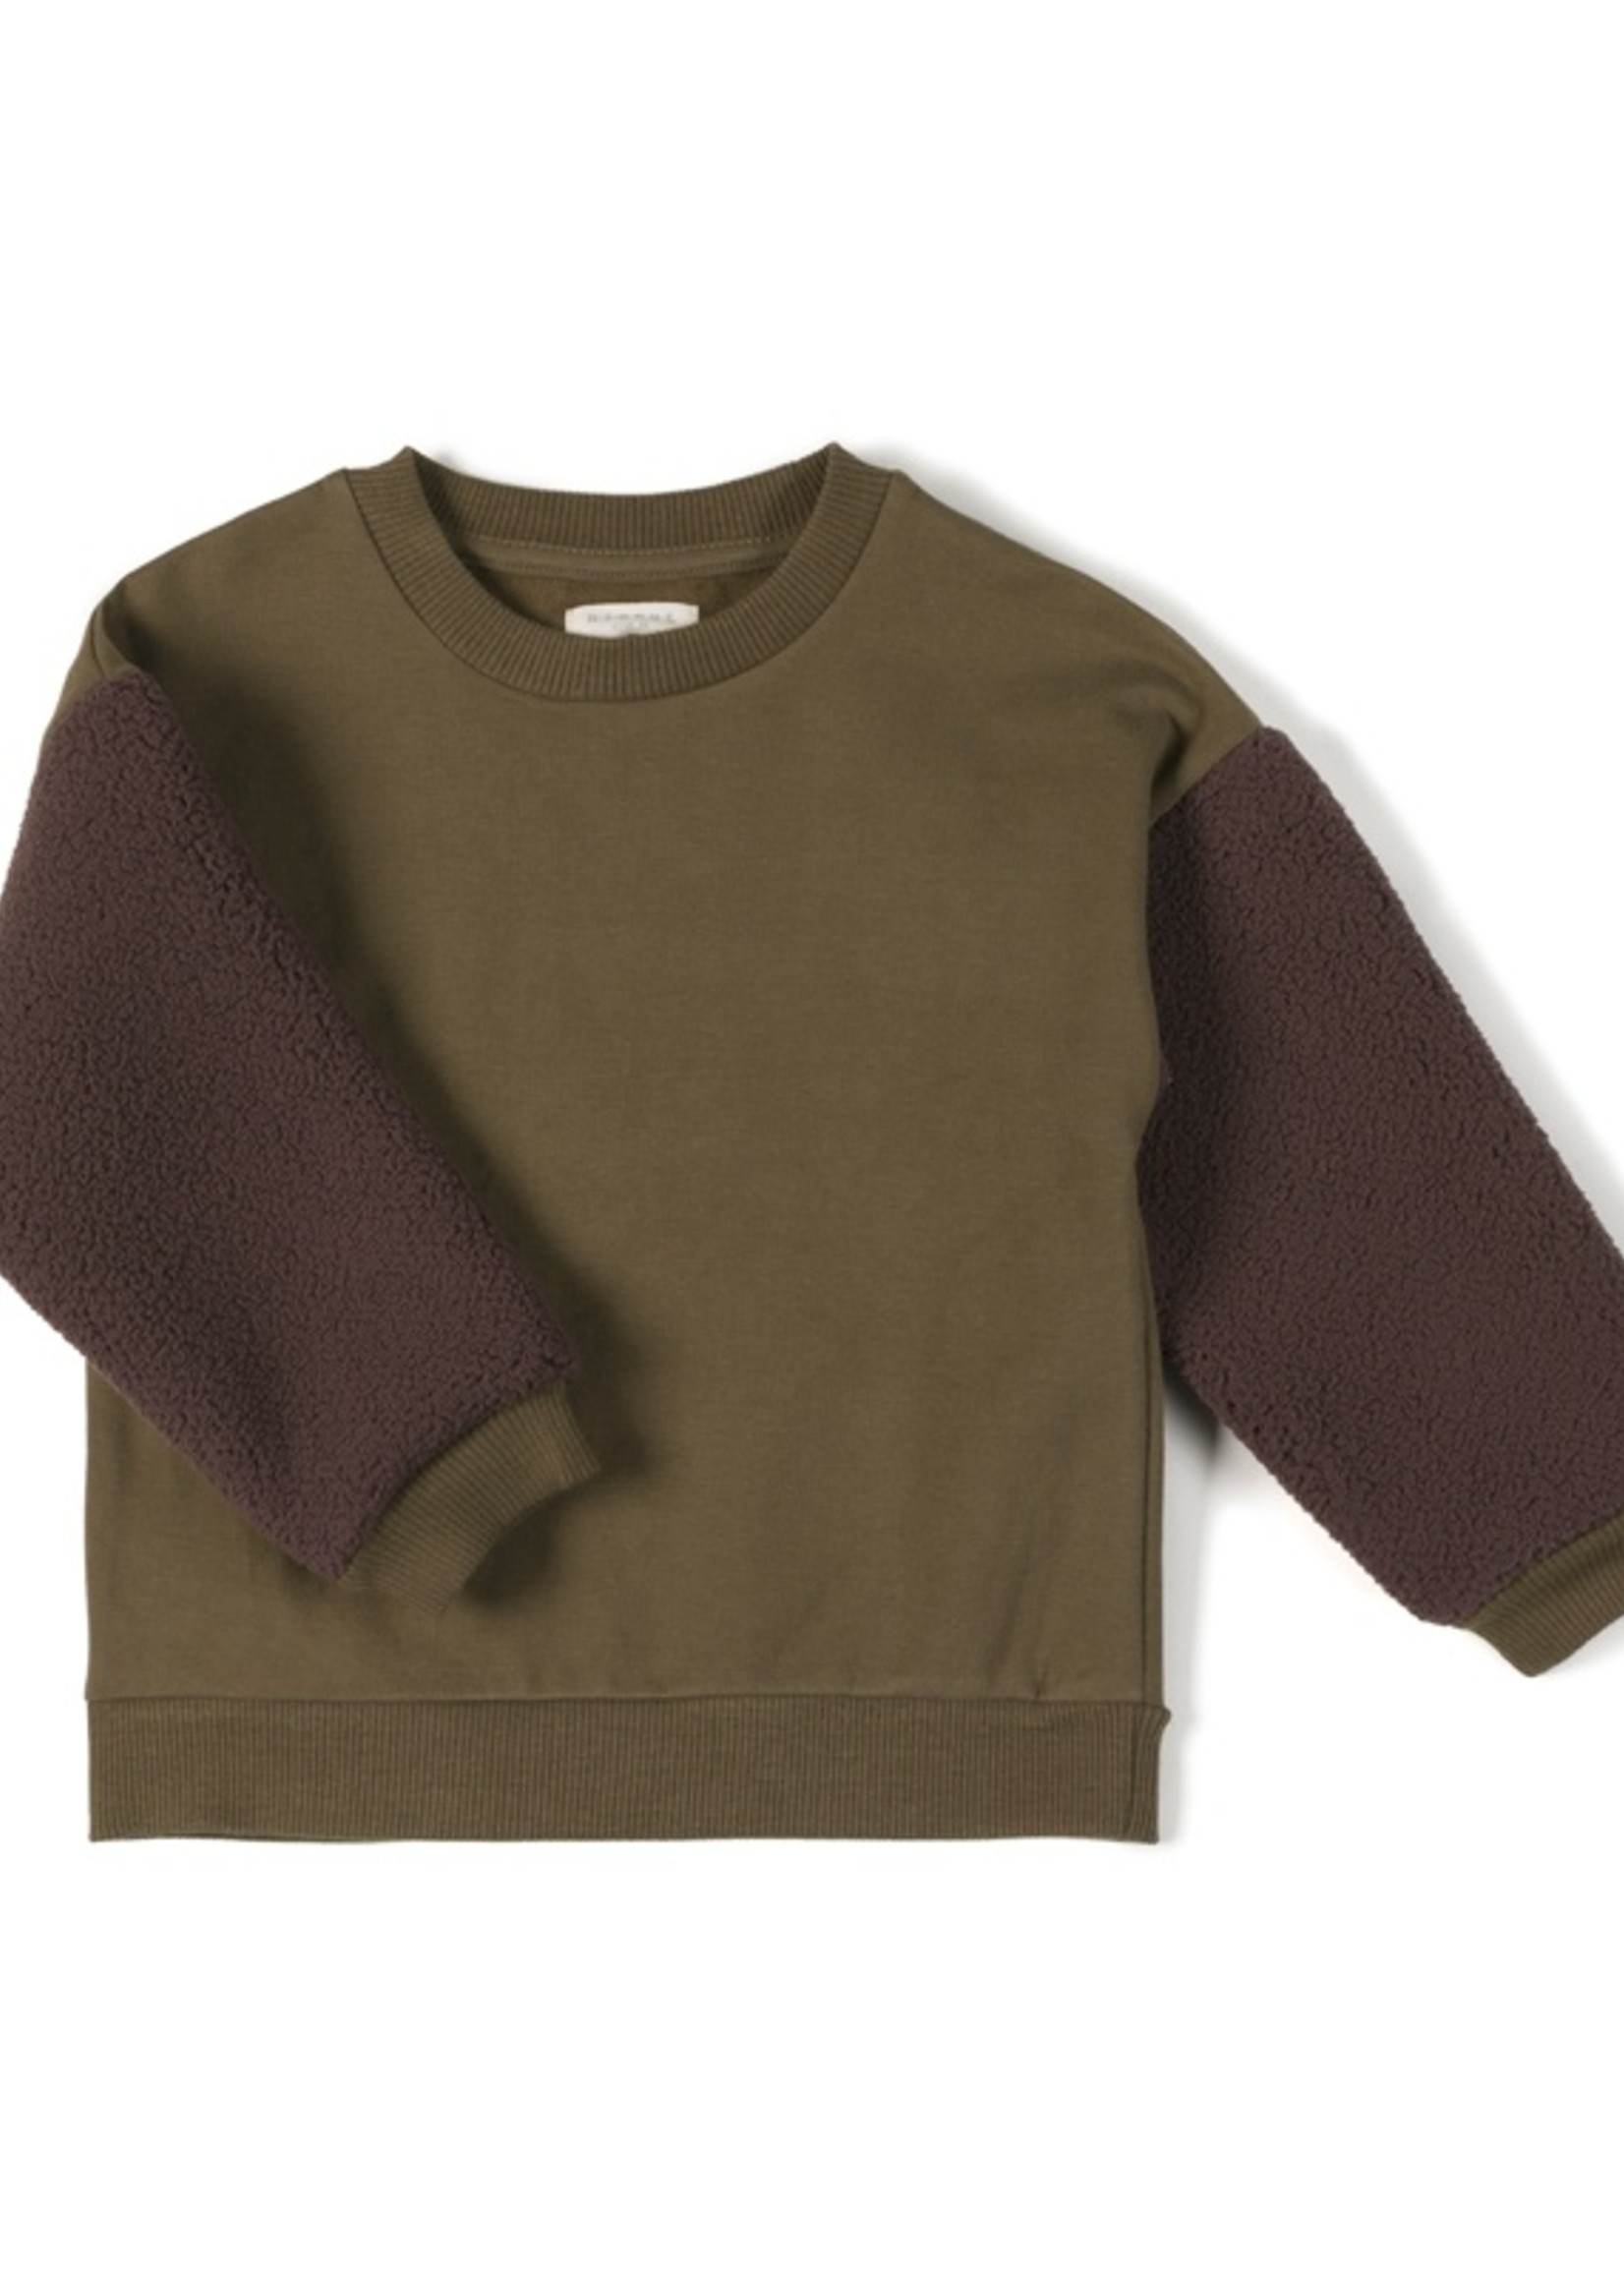 Nixnut Sleeve Sweater - Khaki